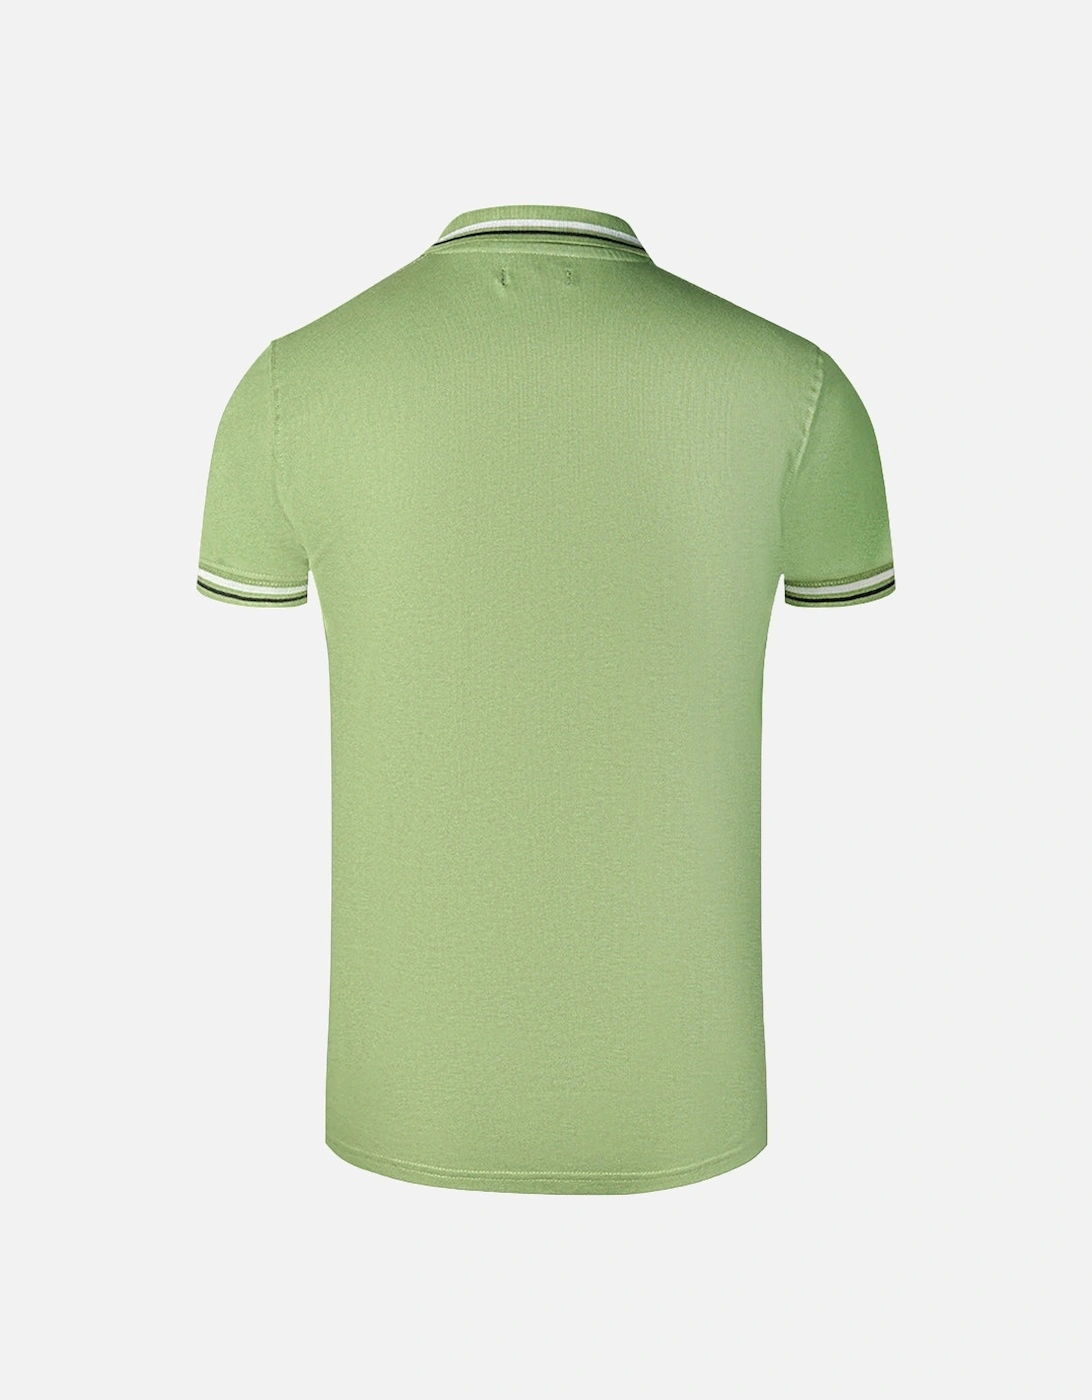 Cavalli Class Twinned Tipped Collar Green Polo Shirt